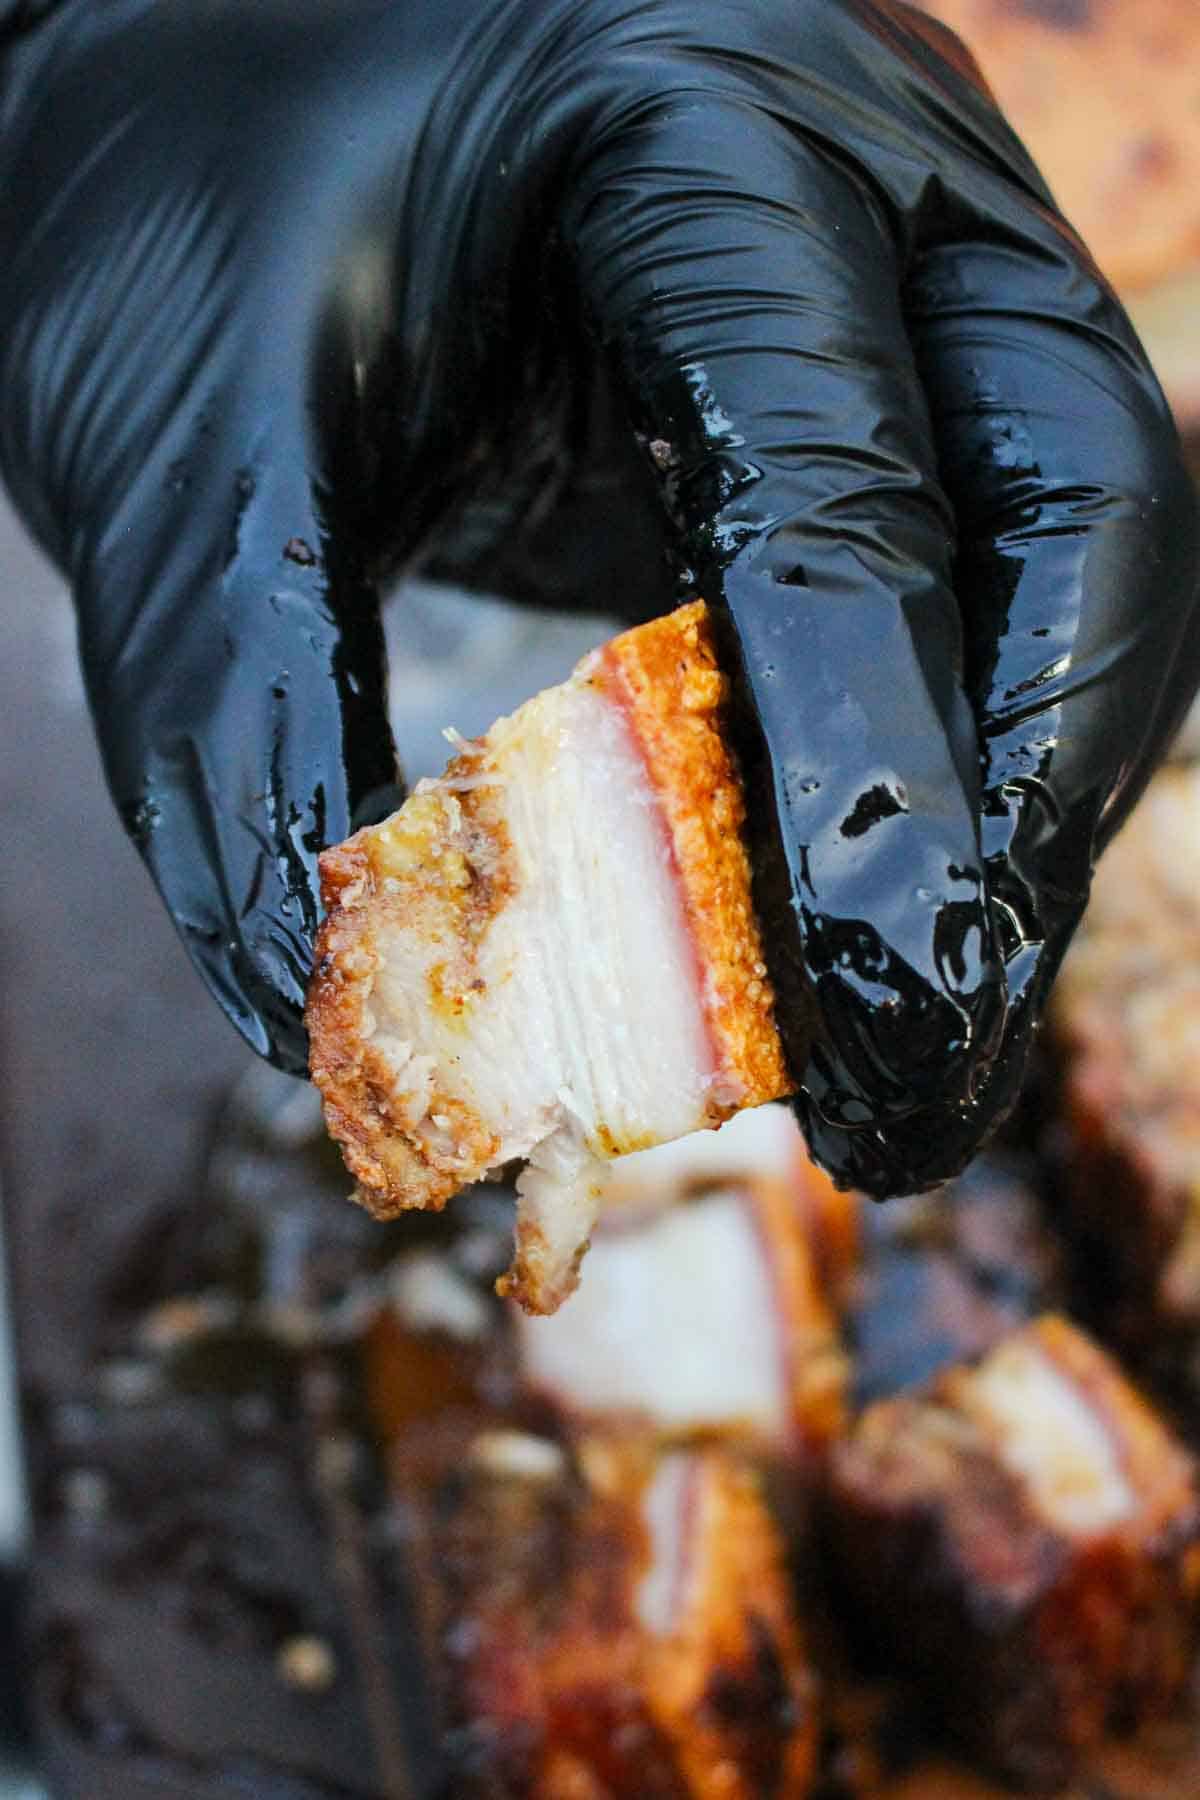 A close up shot of a single crispy pork belly burnt end.